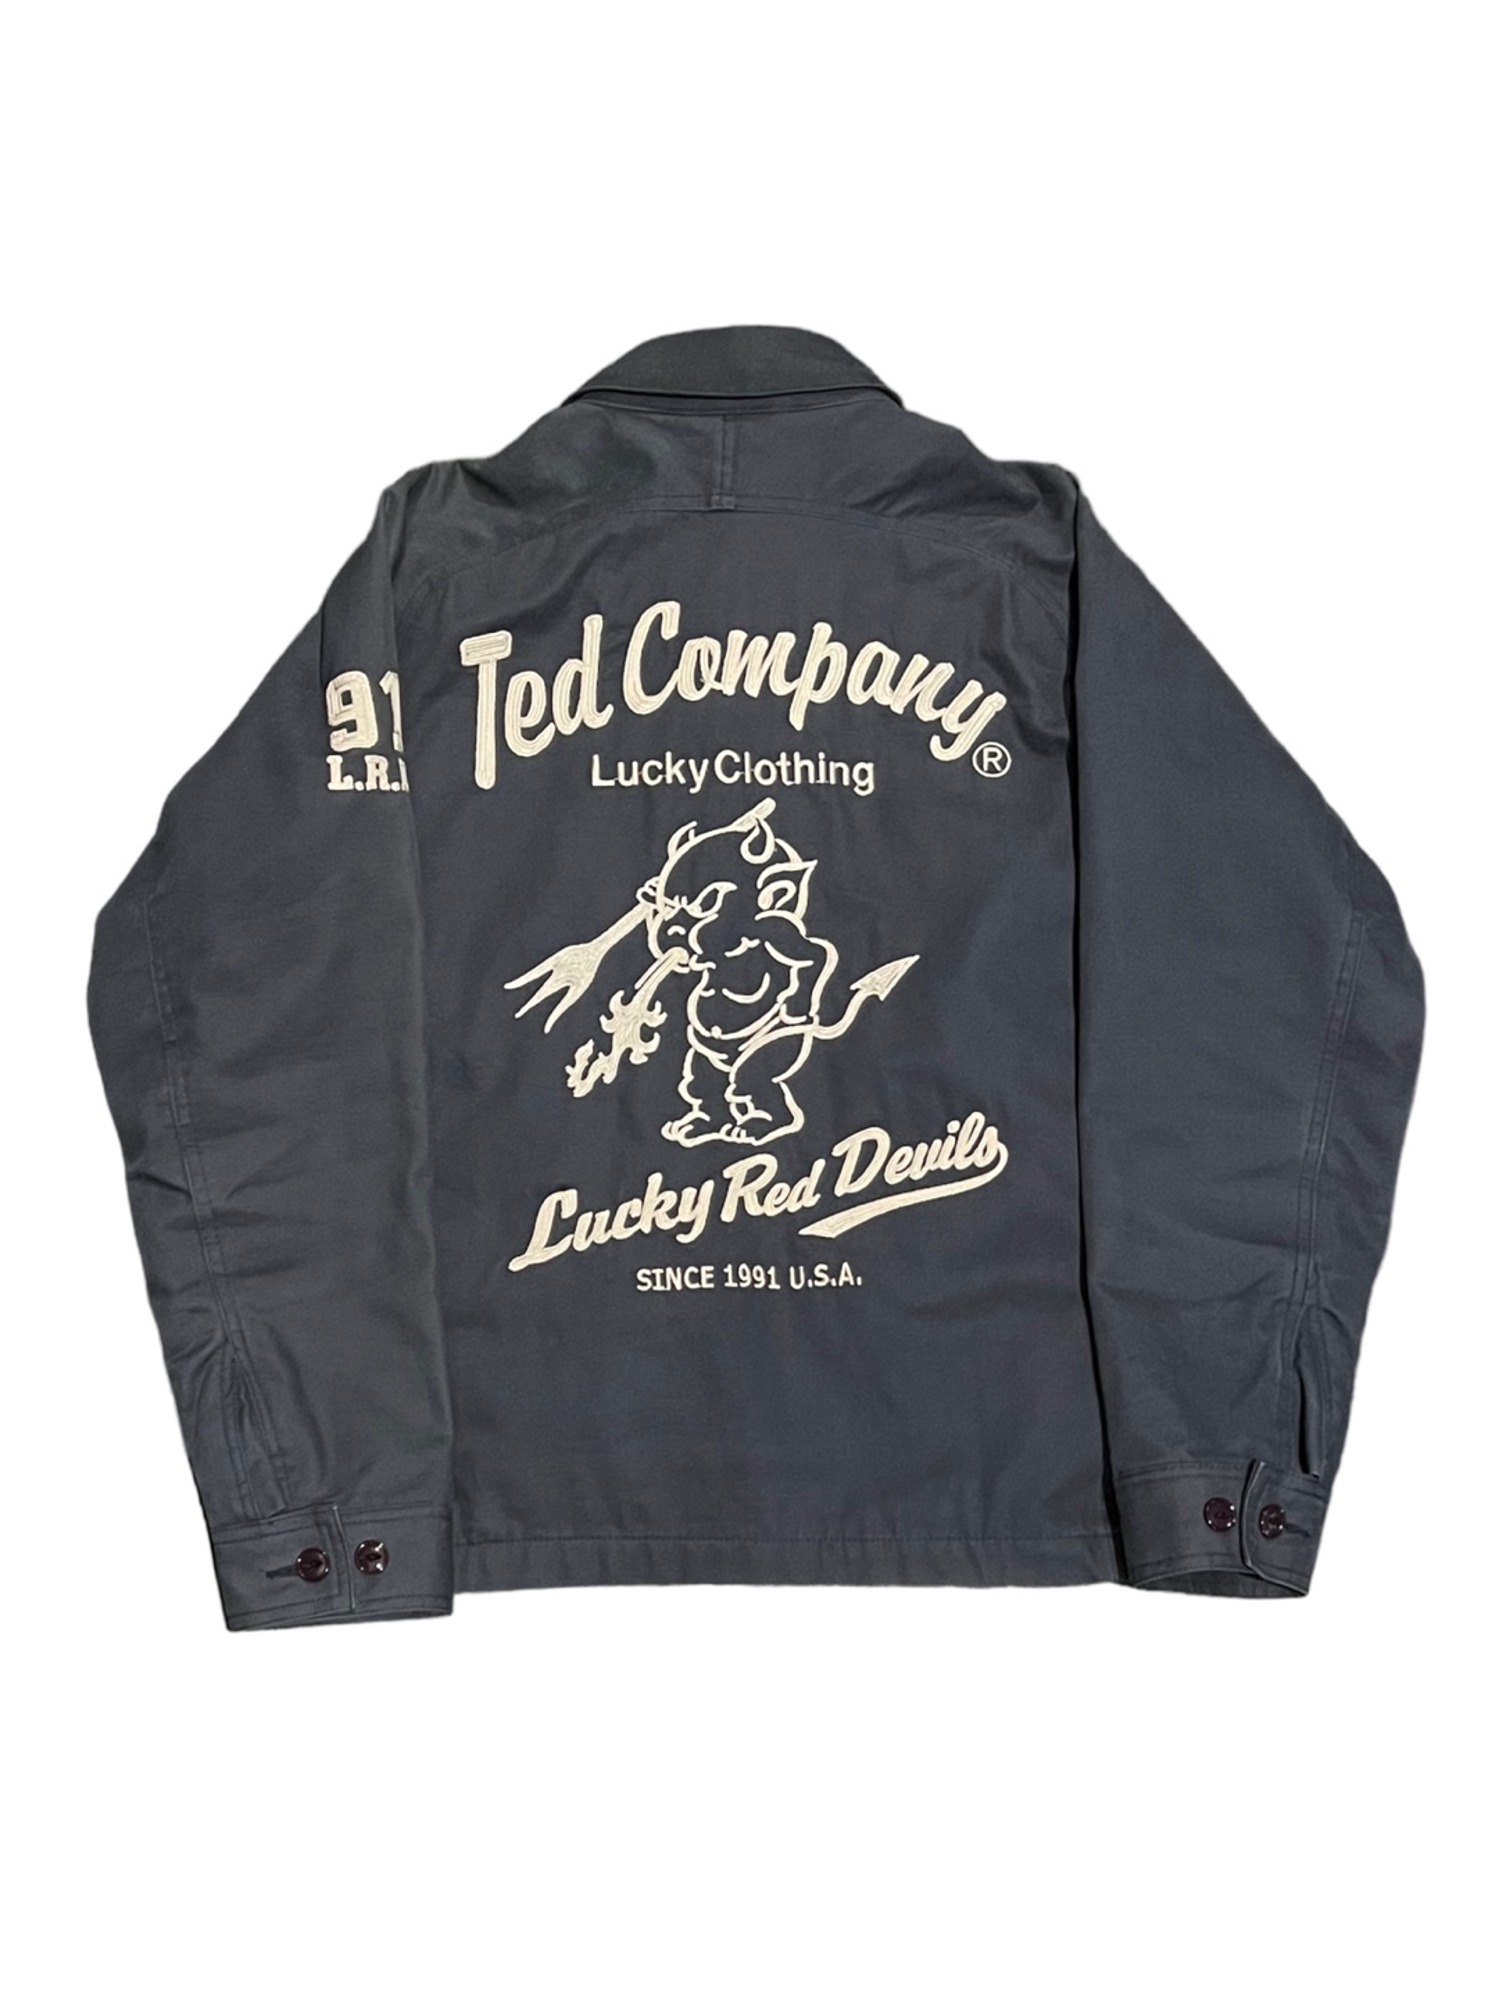 TEDMAN COMPANY Hotstuff Embroidery Work Jacket